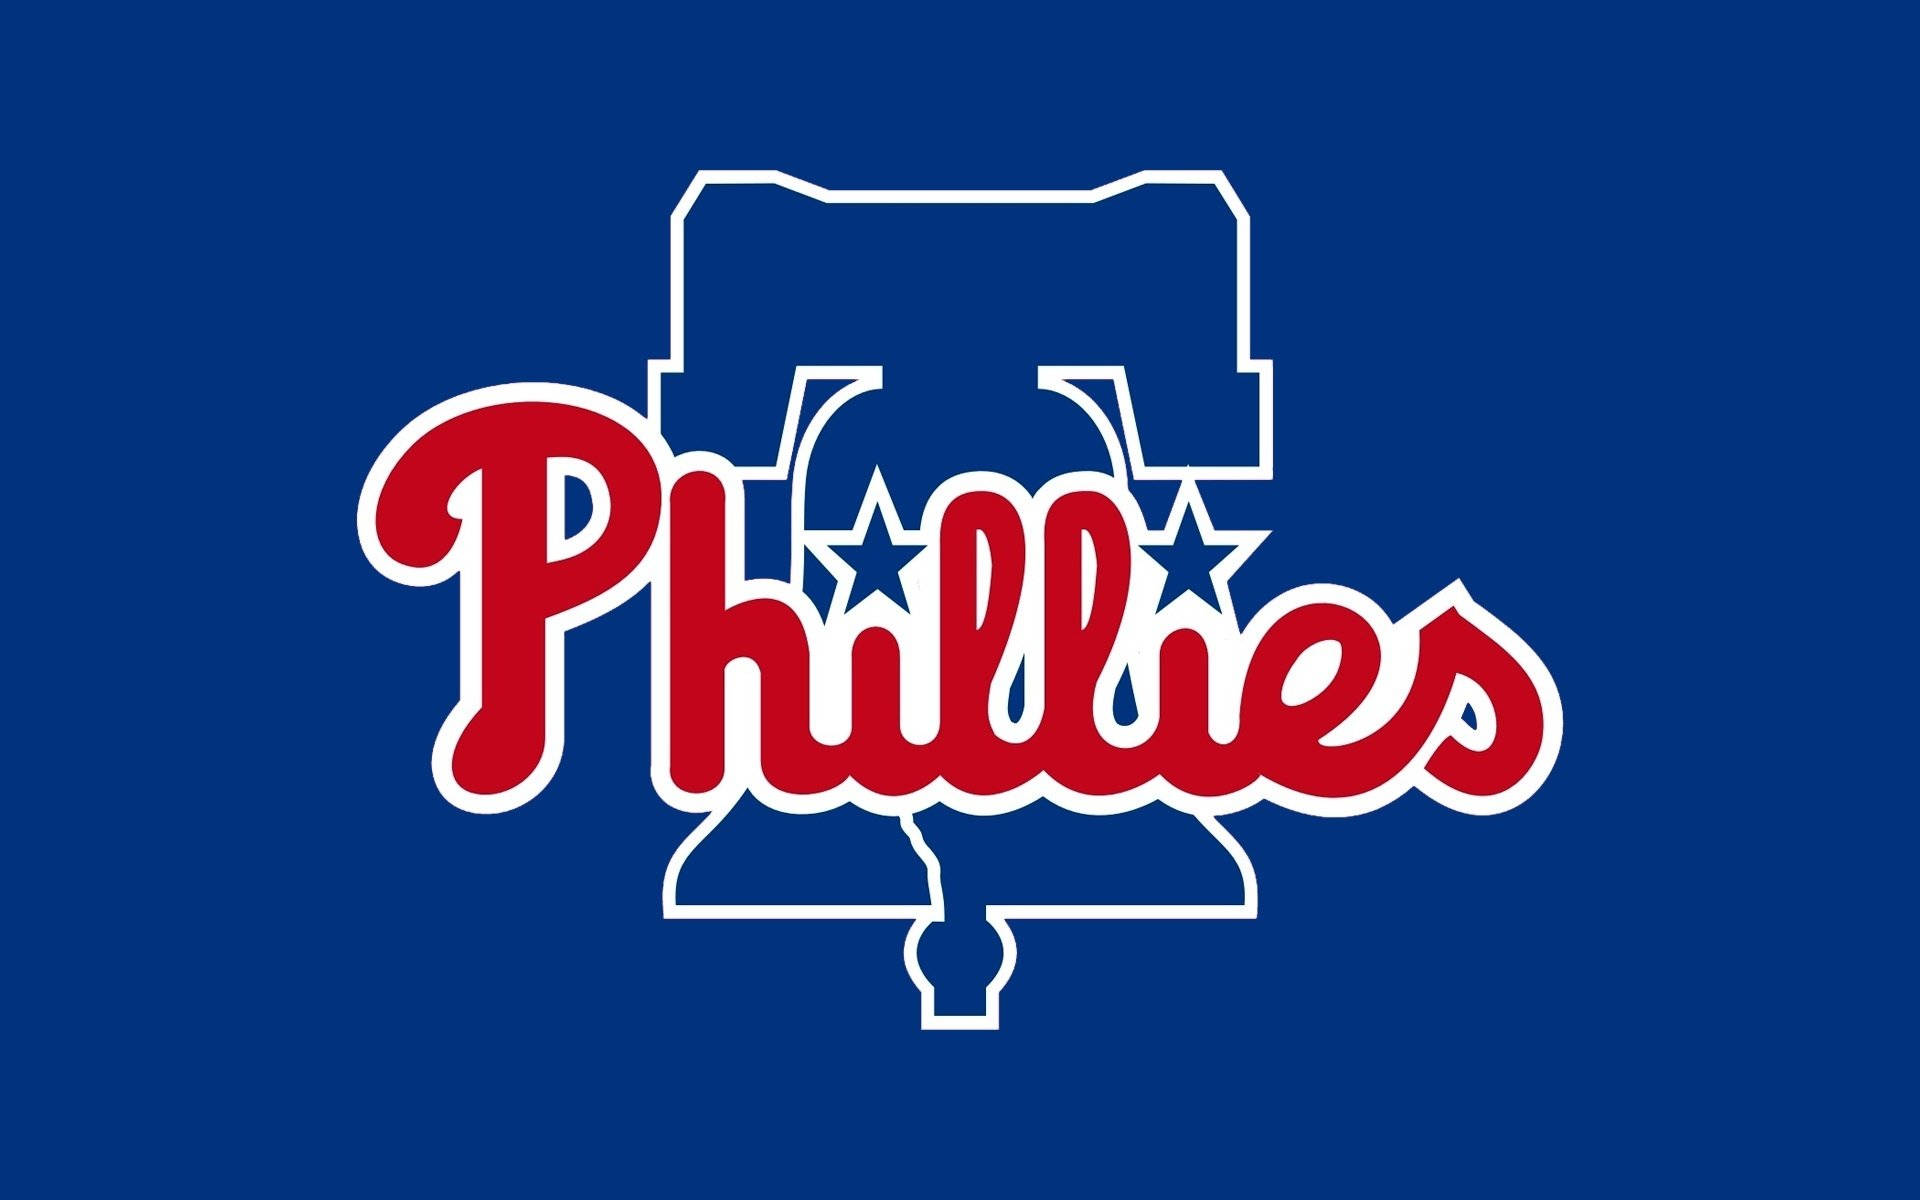 Philadelphia Phillies Logo On A Vibrant Blue Background